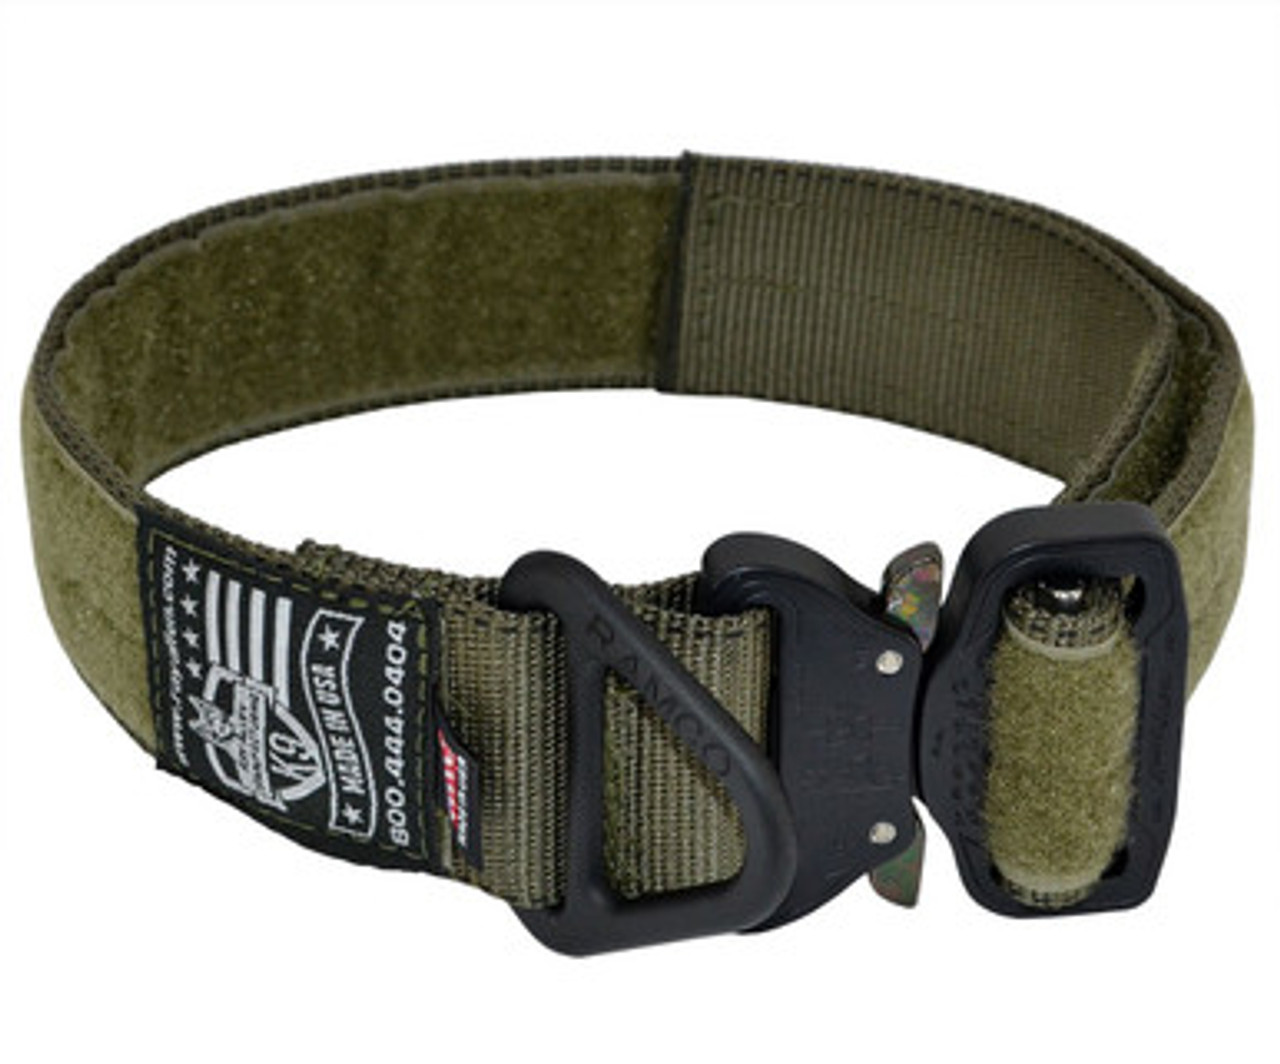 Cobra Buckle Dog Collar, K9 Training Collar